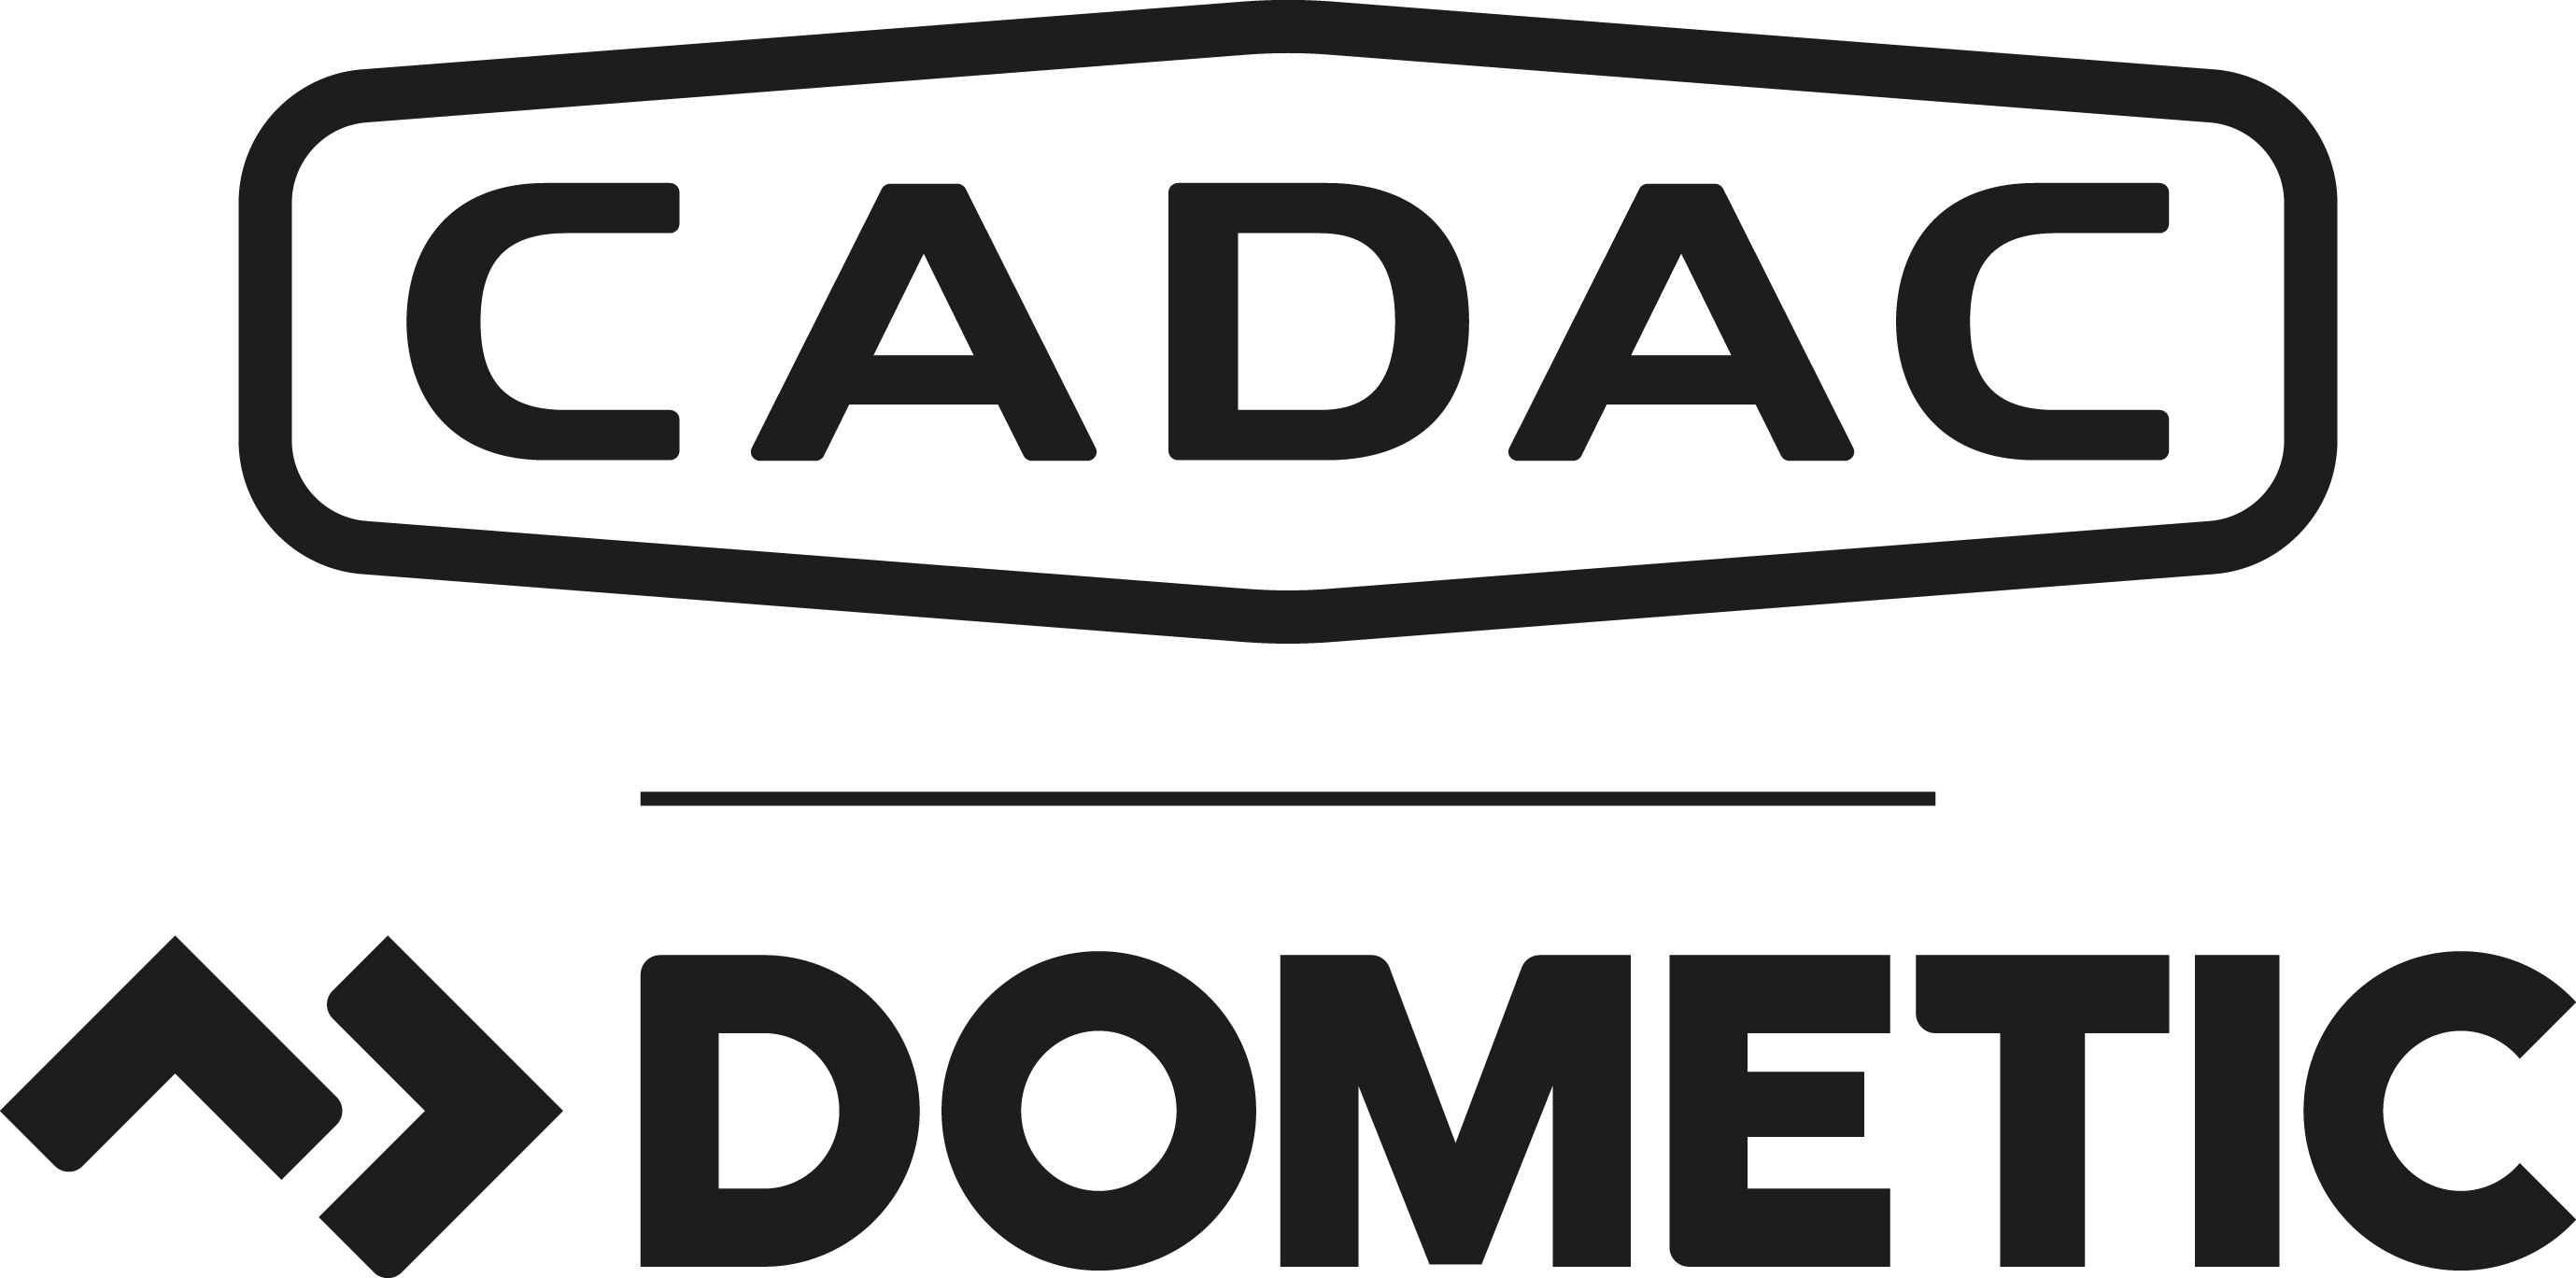 Cadac Dometic Logo Vertical Black V2 1 